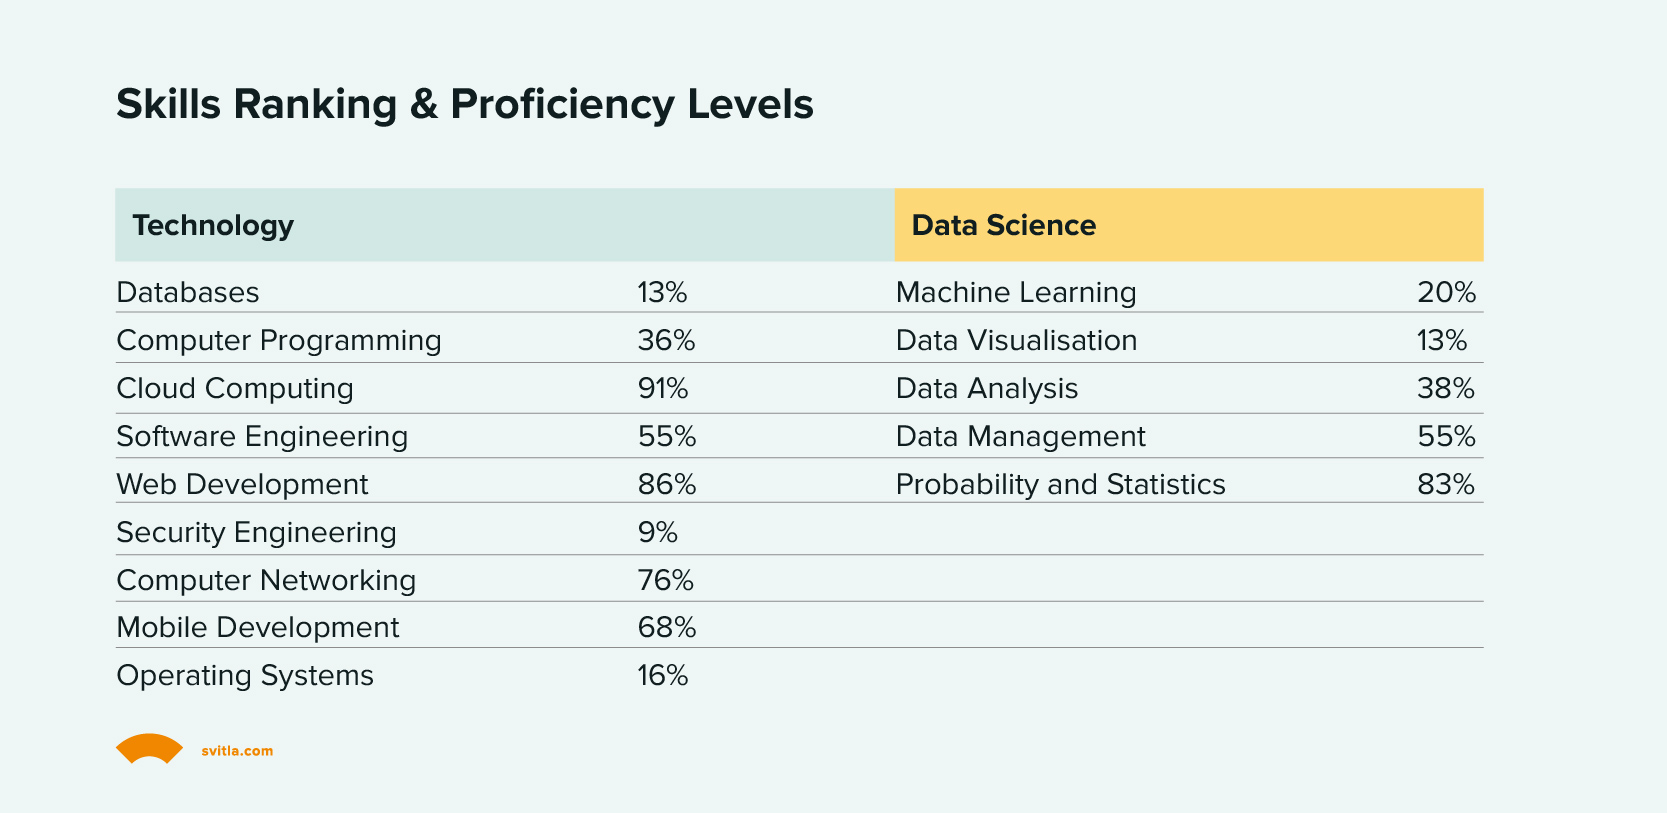 Skills Ranking & Proficiency Levels